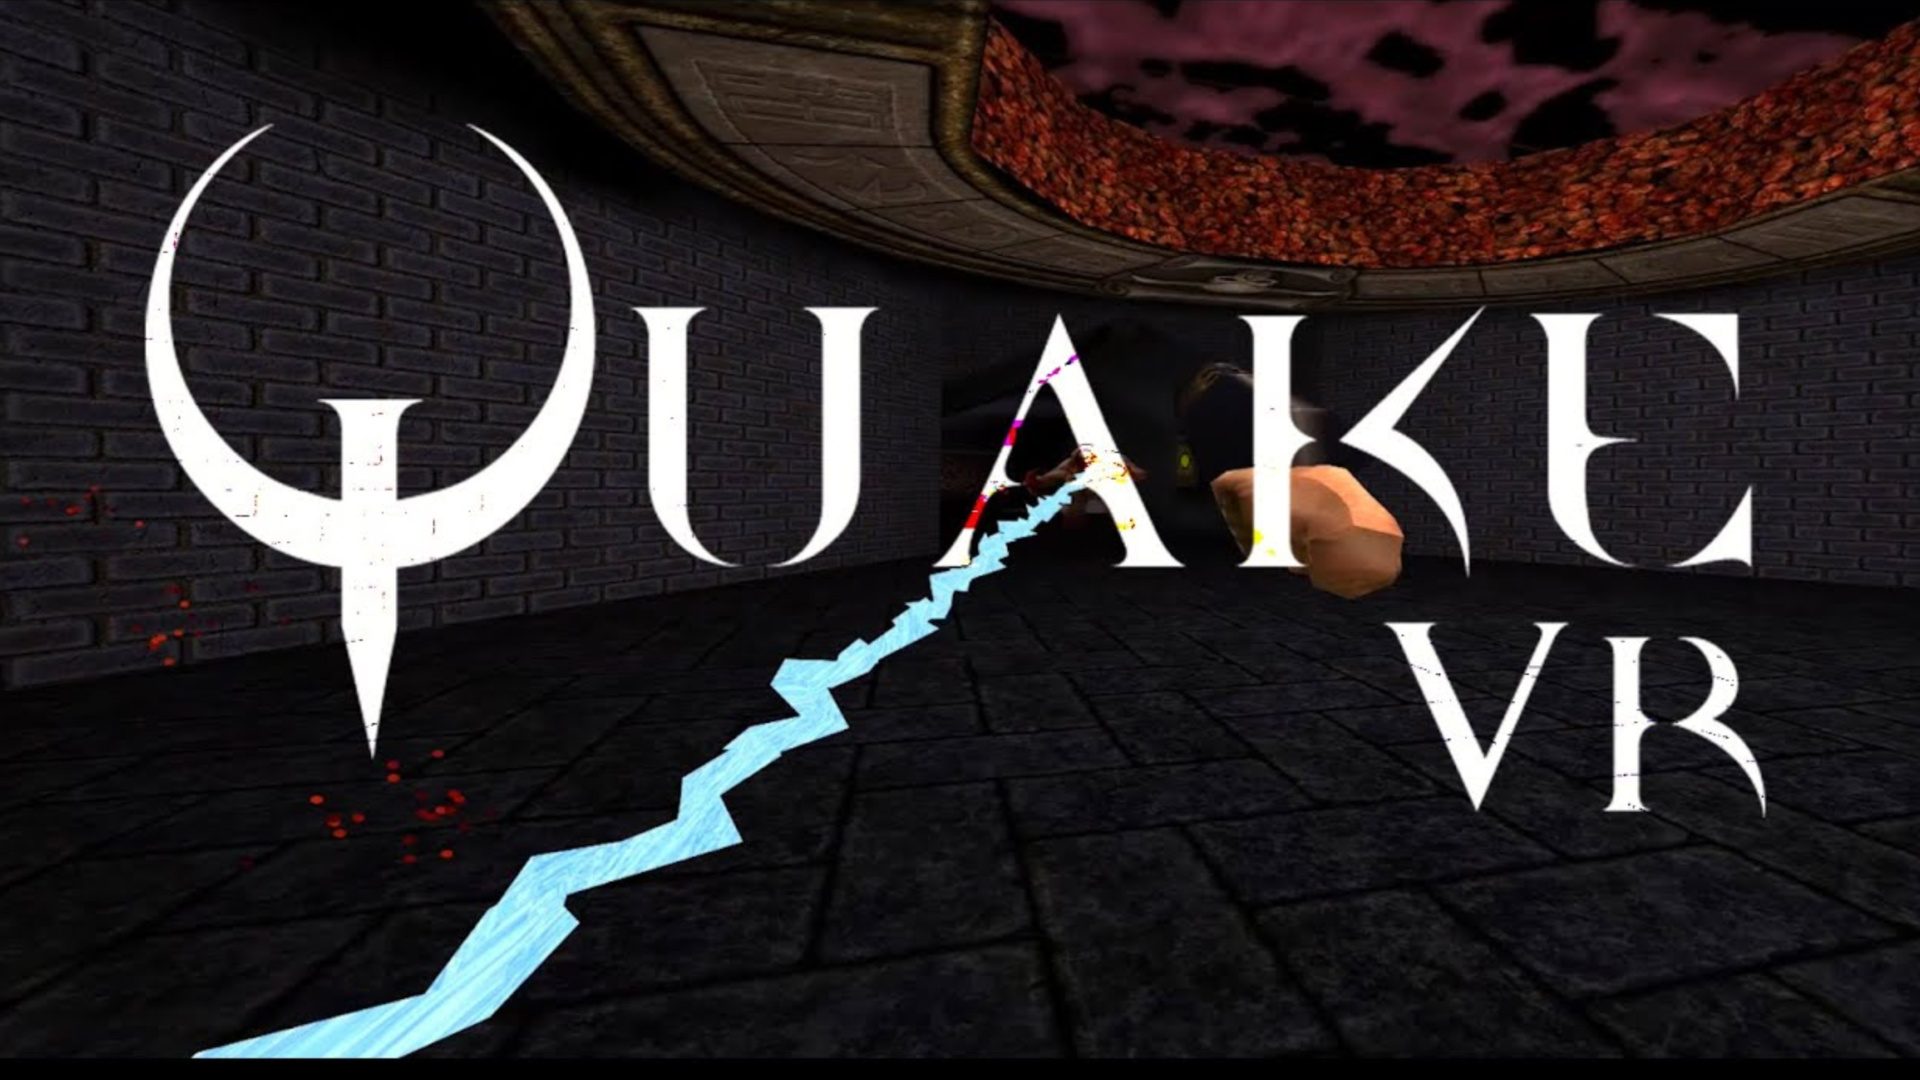 Quake vr. Quake 1996. Quest 1 VR.